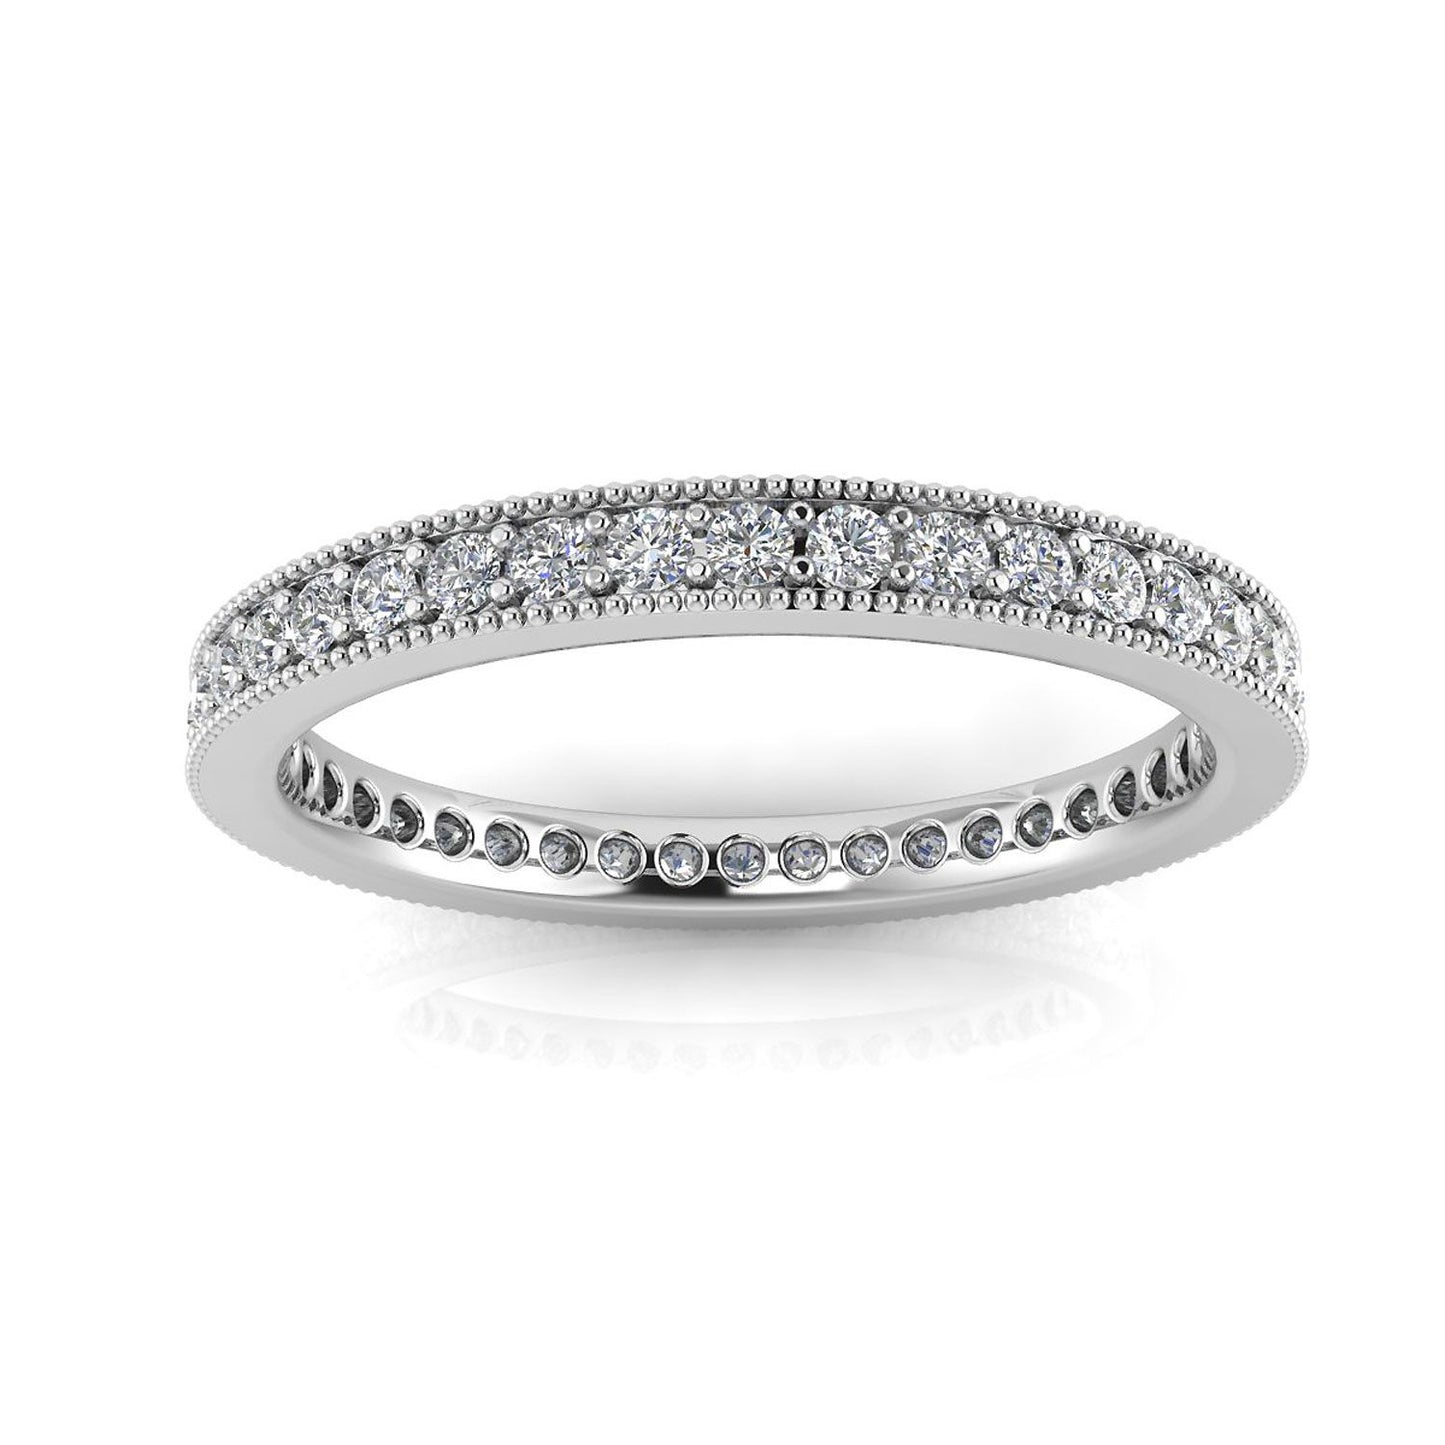 Round Brilliant Cut Diamond Pave & Milgrain Set Eternity Ring In 18k White Gold  (0.99ct. Tw.) Ring Size 7.5